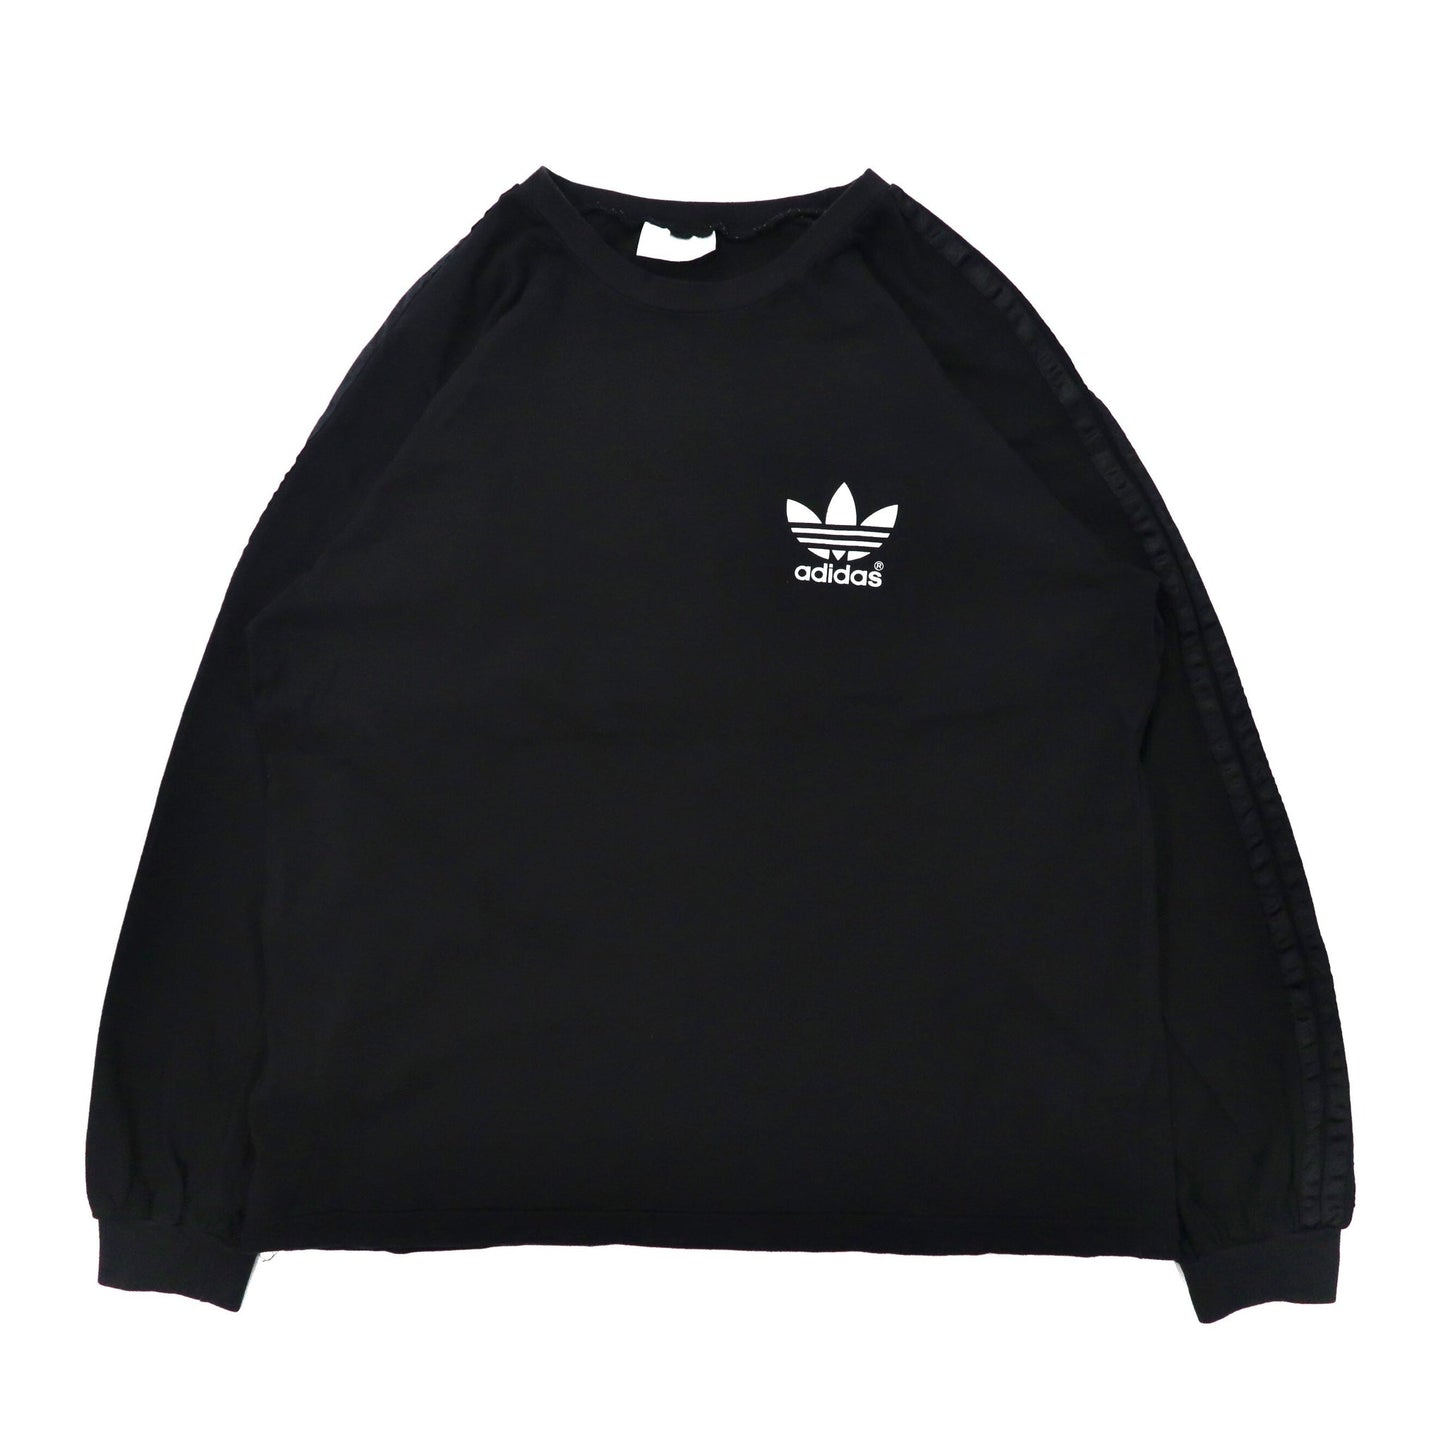 Adidas Long Sleeve Tee T-Shirt L Black 90s Cotton 3 Striped Logo 